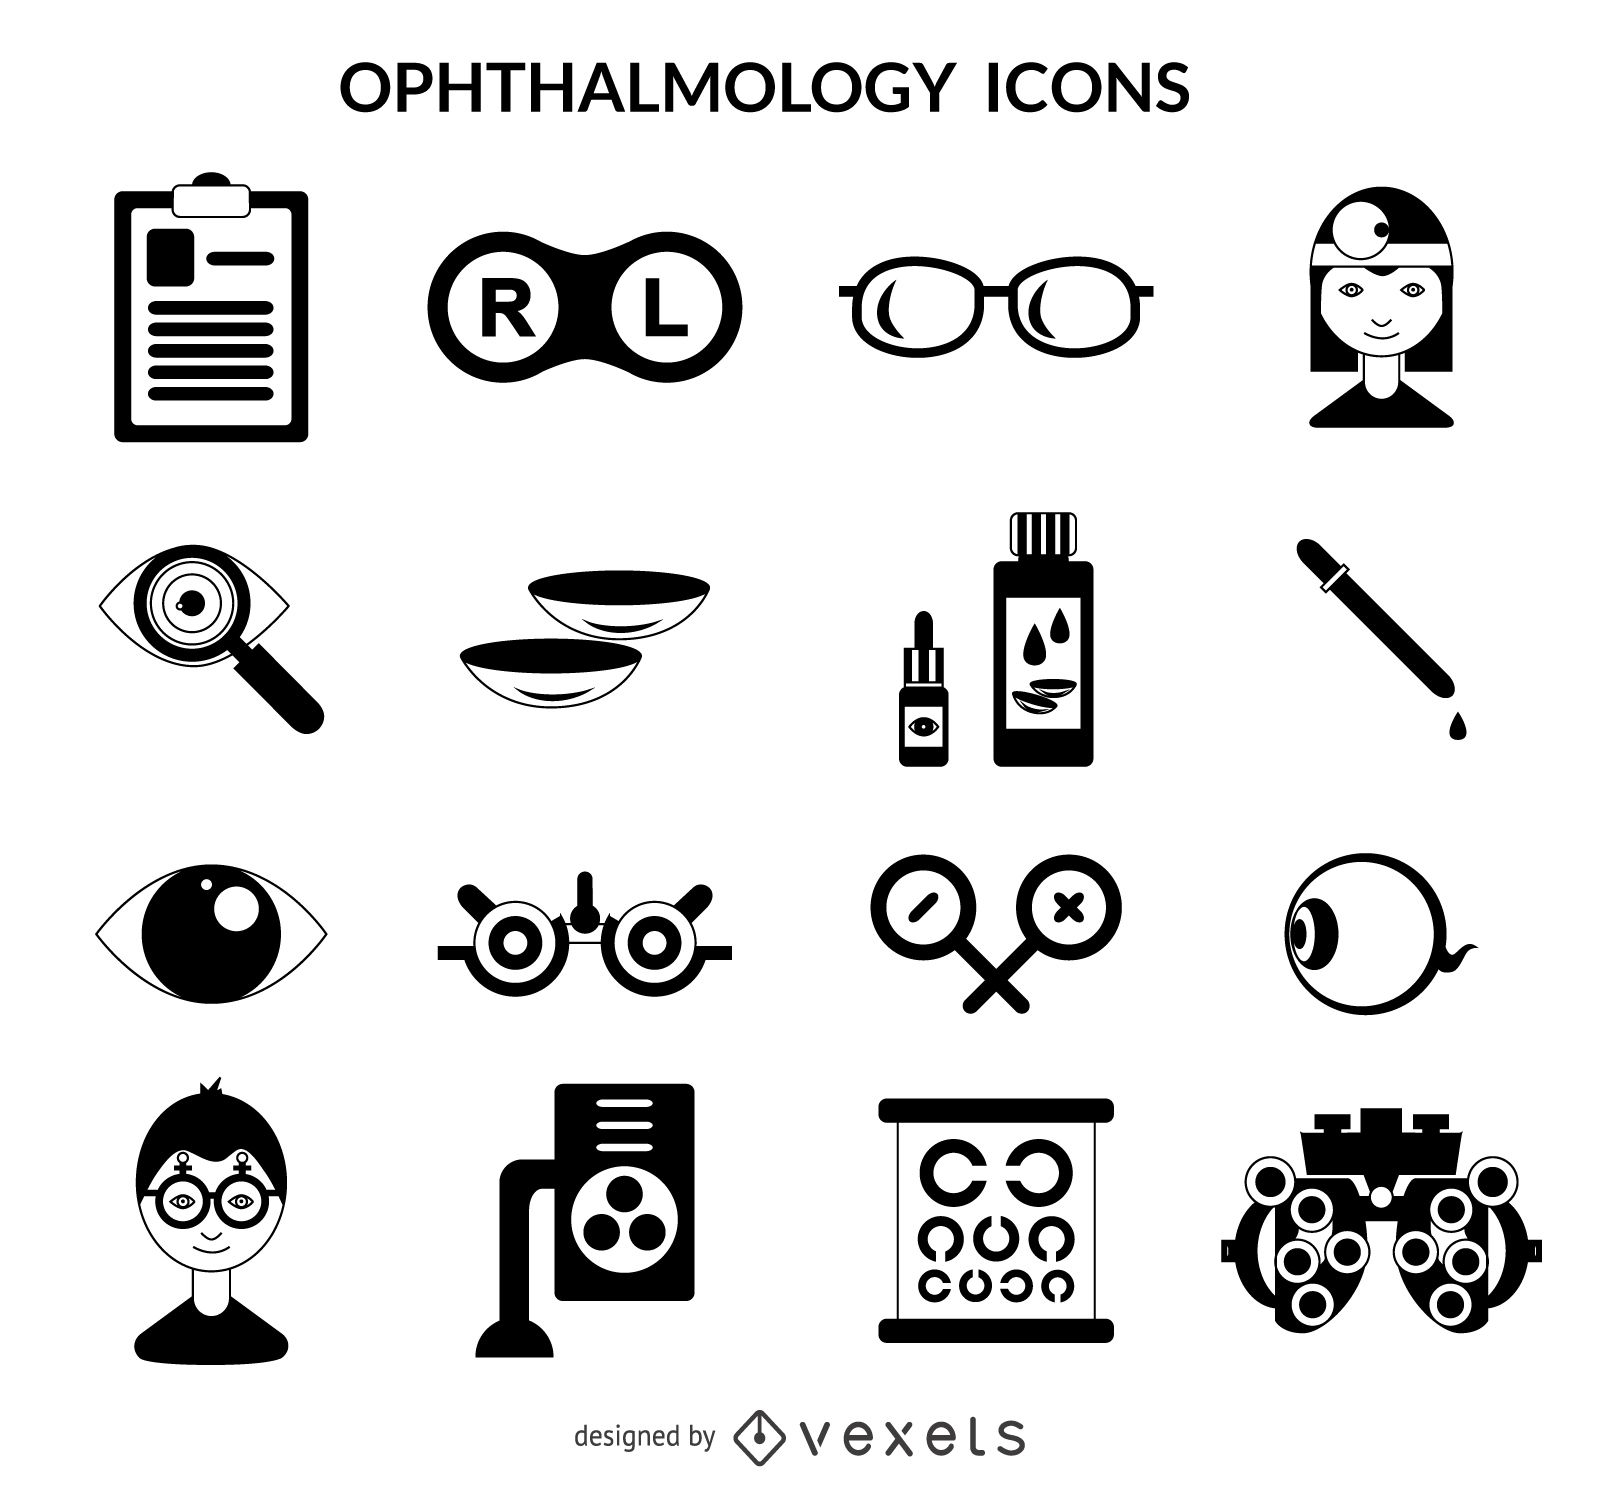 Paquete de iconos de oftalmolog?a de accidentes cerebrovasculares